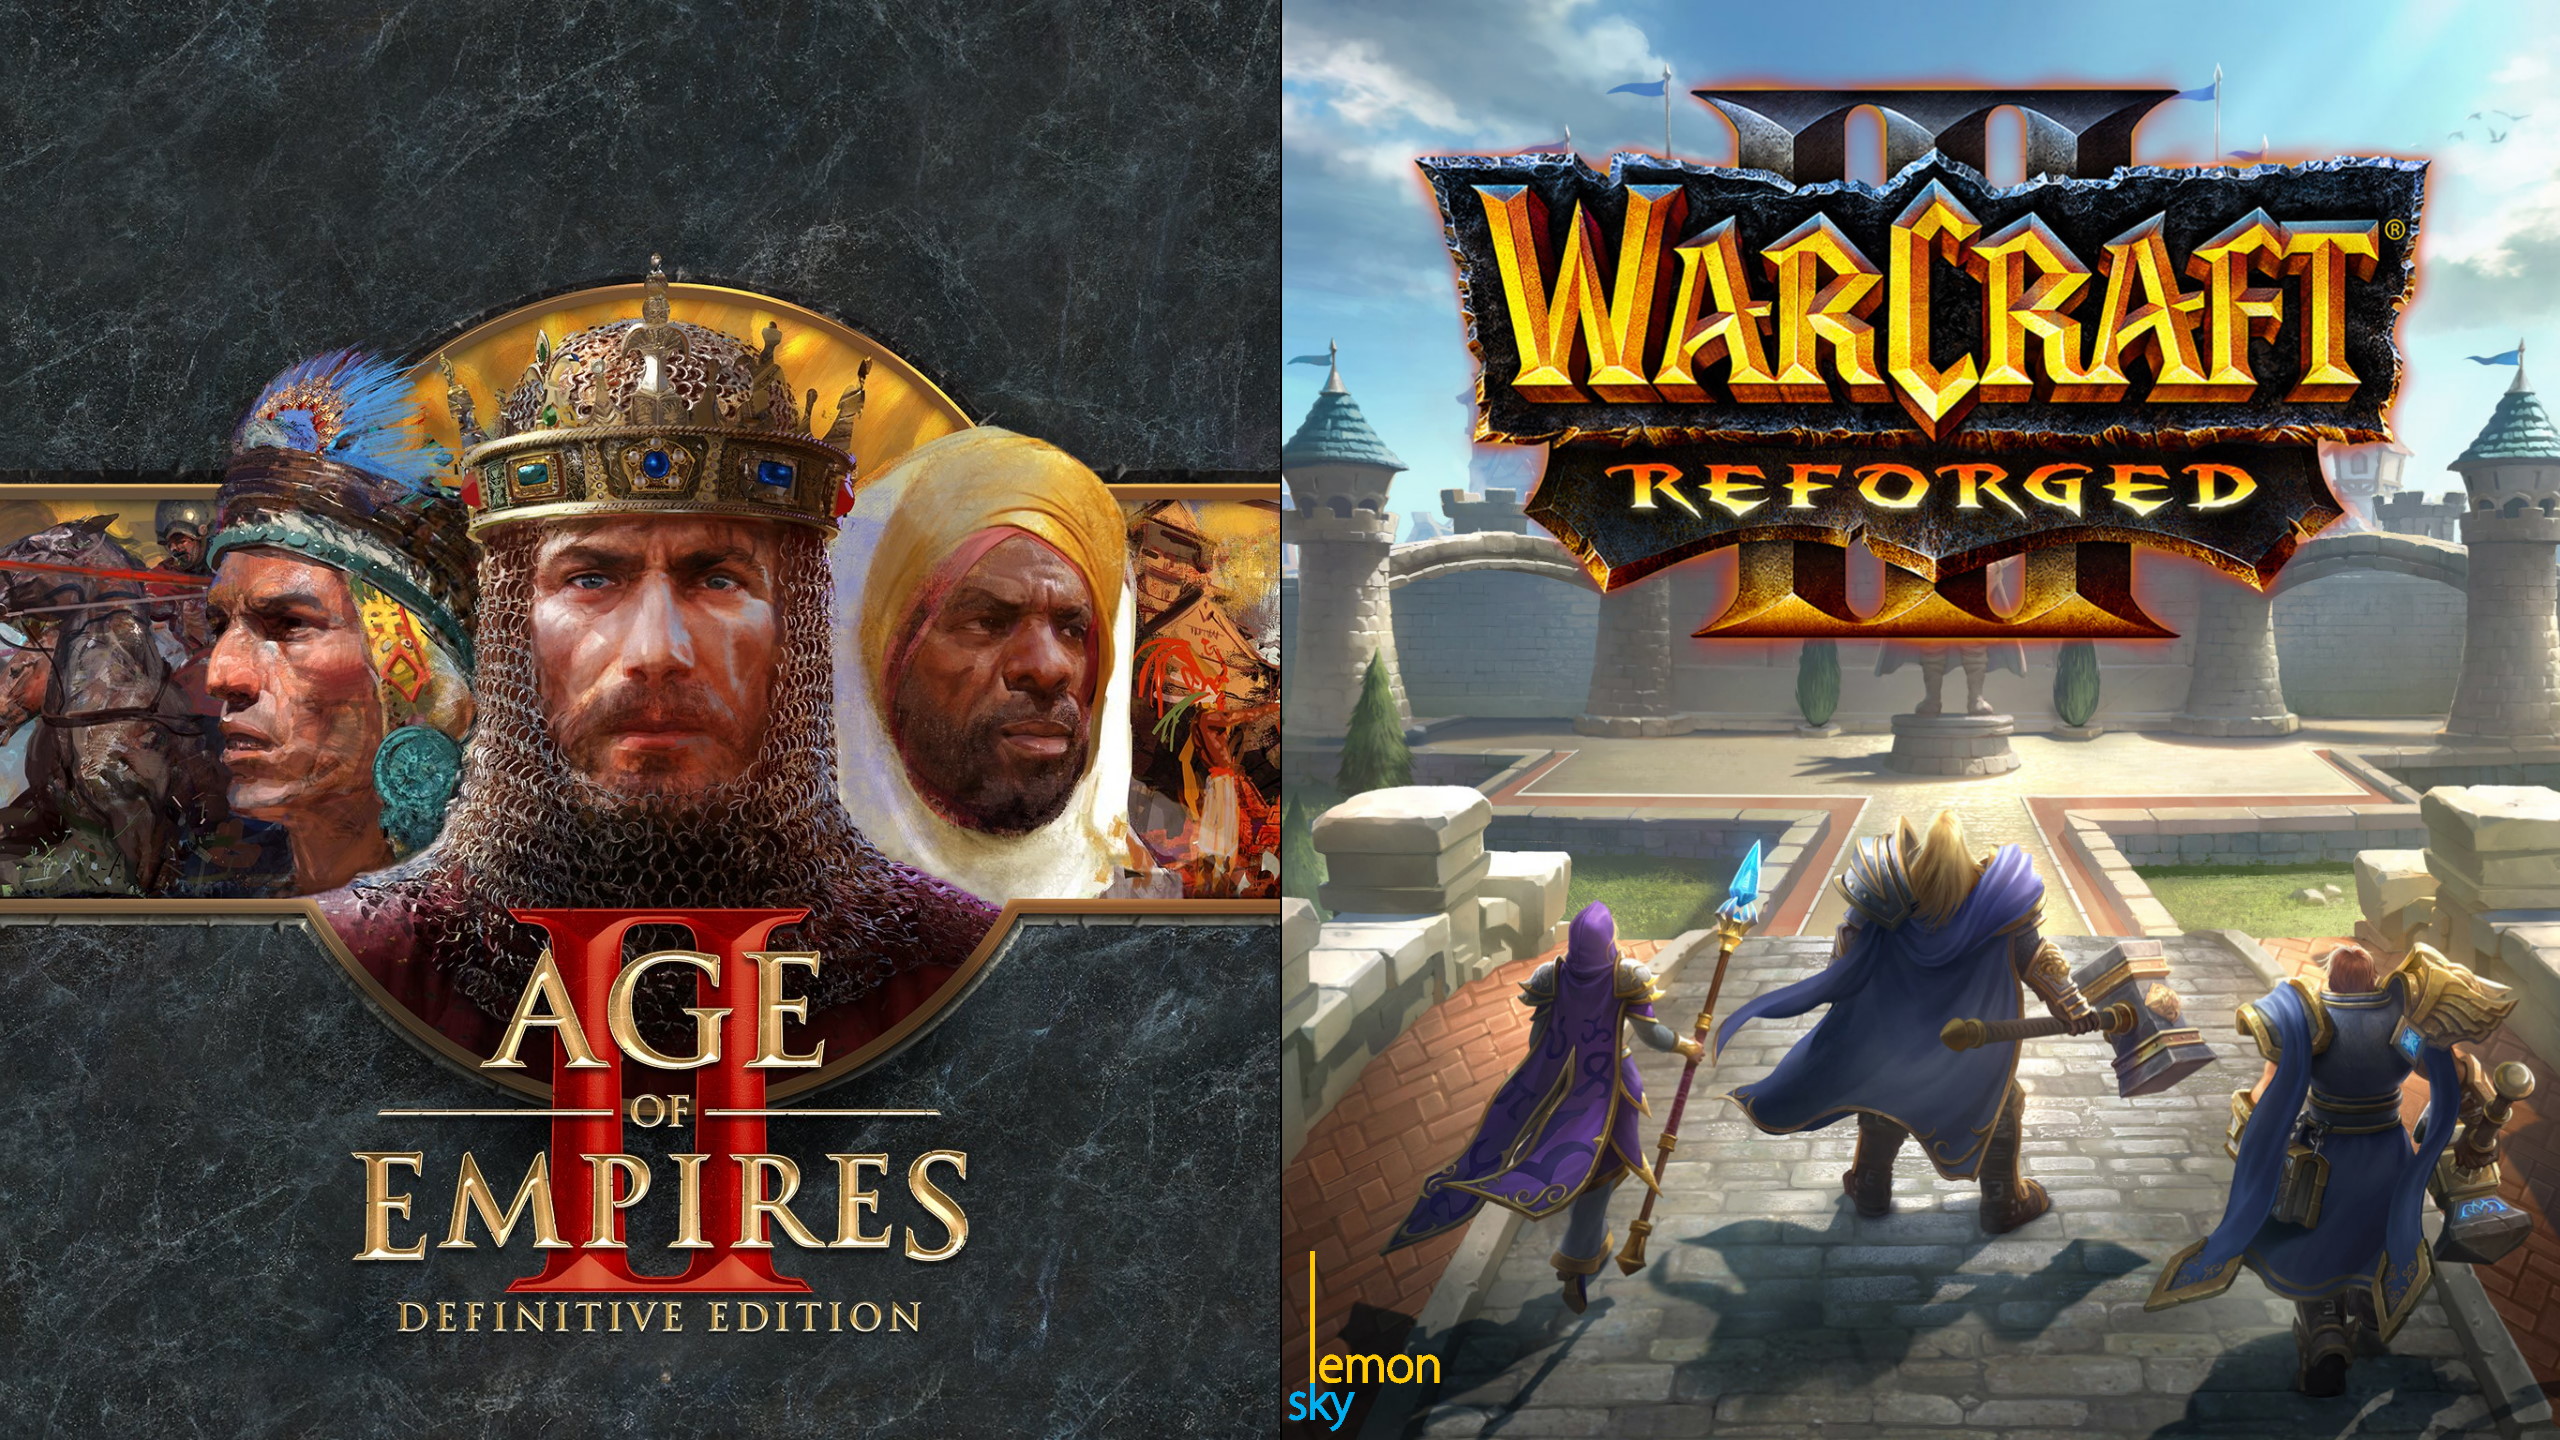 Title. Links: Age of Empires 2: Definitive Edition Promo. Rechts: Loading Screen Artwort für Blizzcon Demo of WarCraft 3 Reforged von Eilene Cherie